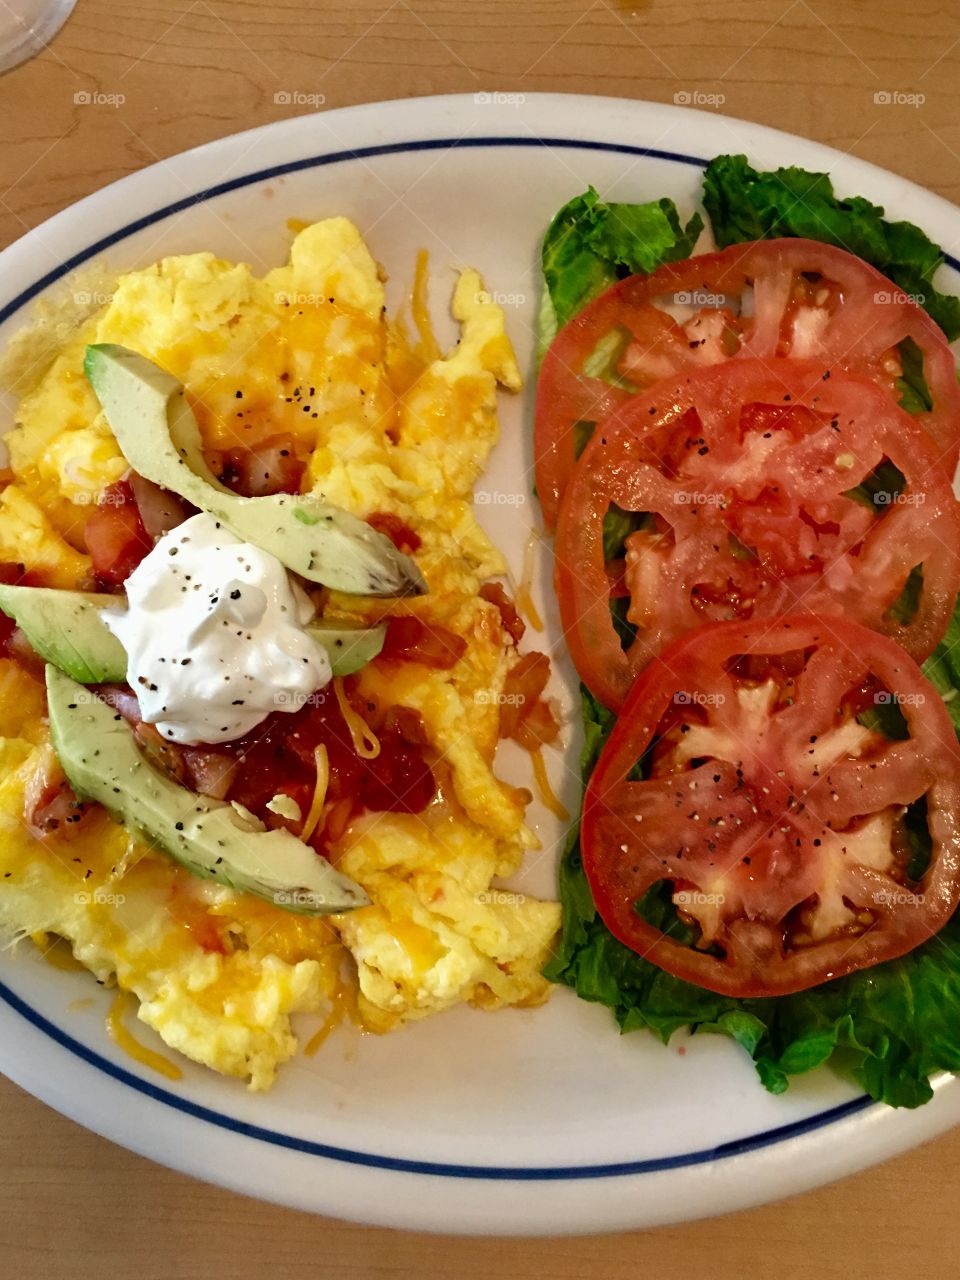 California scramble breakfast. Eggs, jack cheese, salsa, avocado and sour cream. Yum!! 